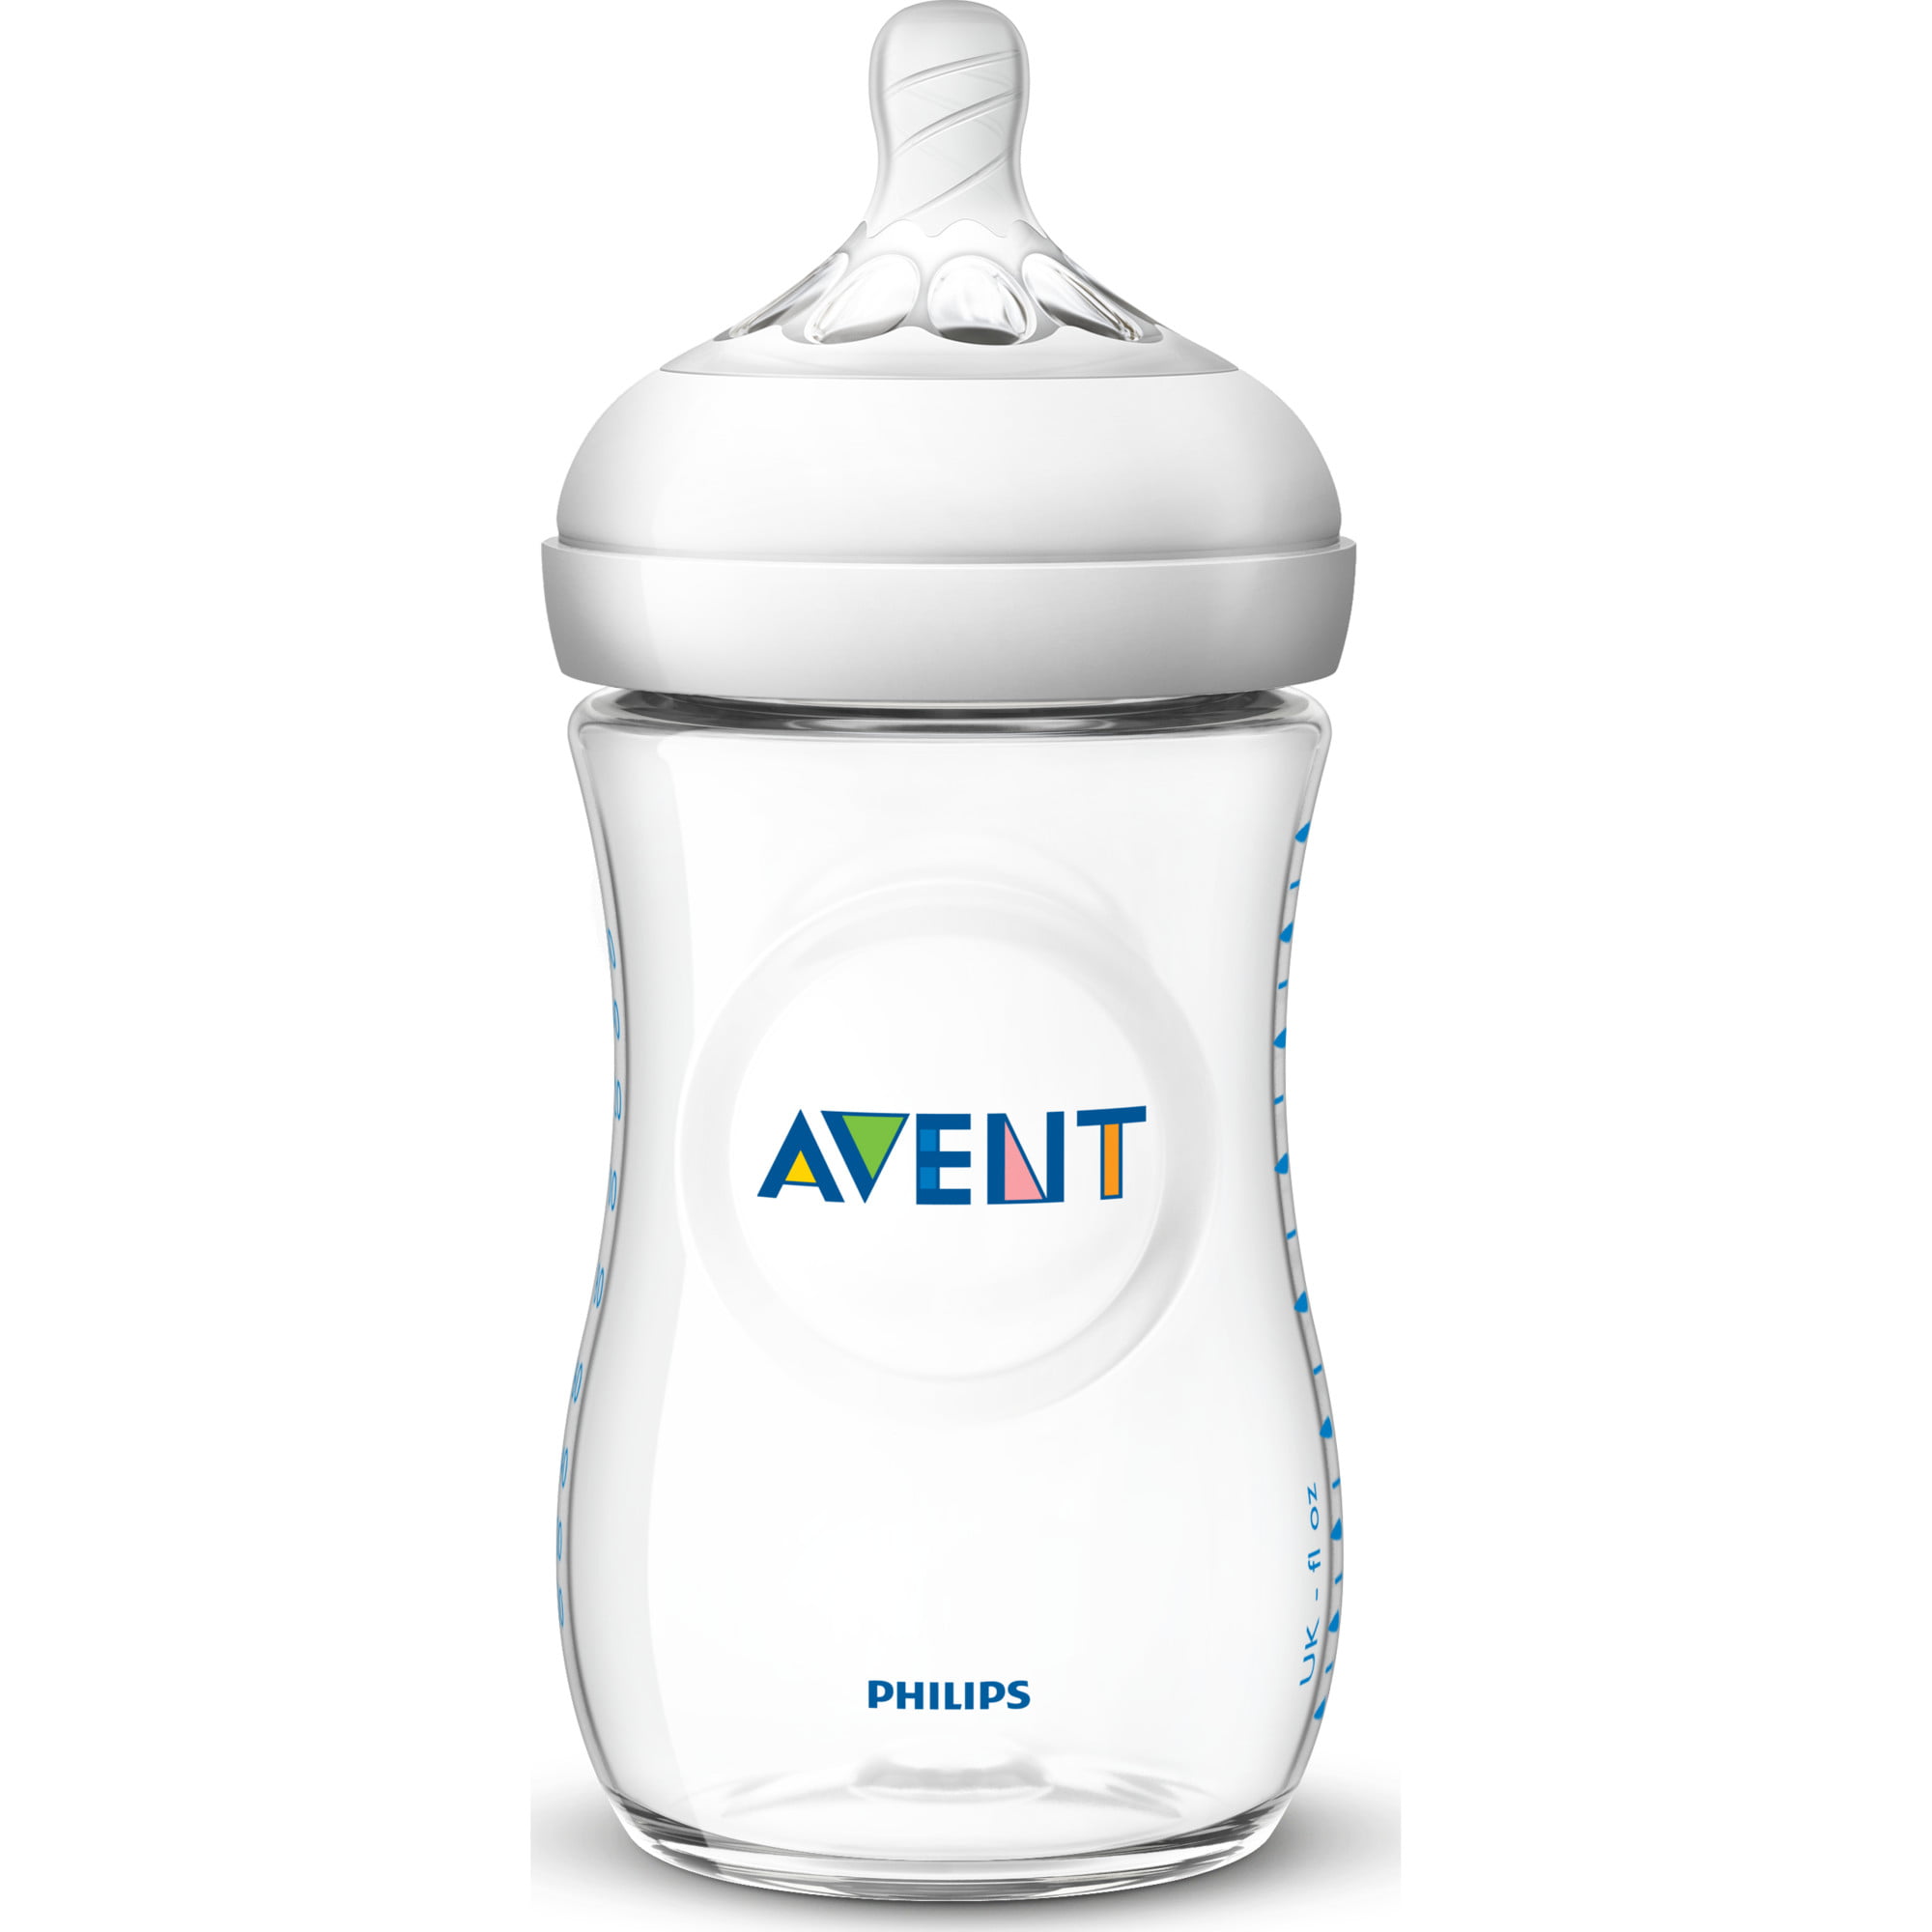 Airflex baby bottle teats x 2 1 3 & 6 months plus.NEW Avent Philips classic 